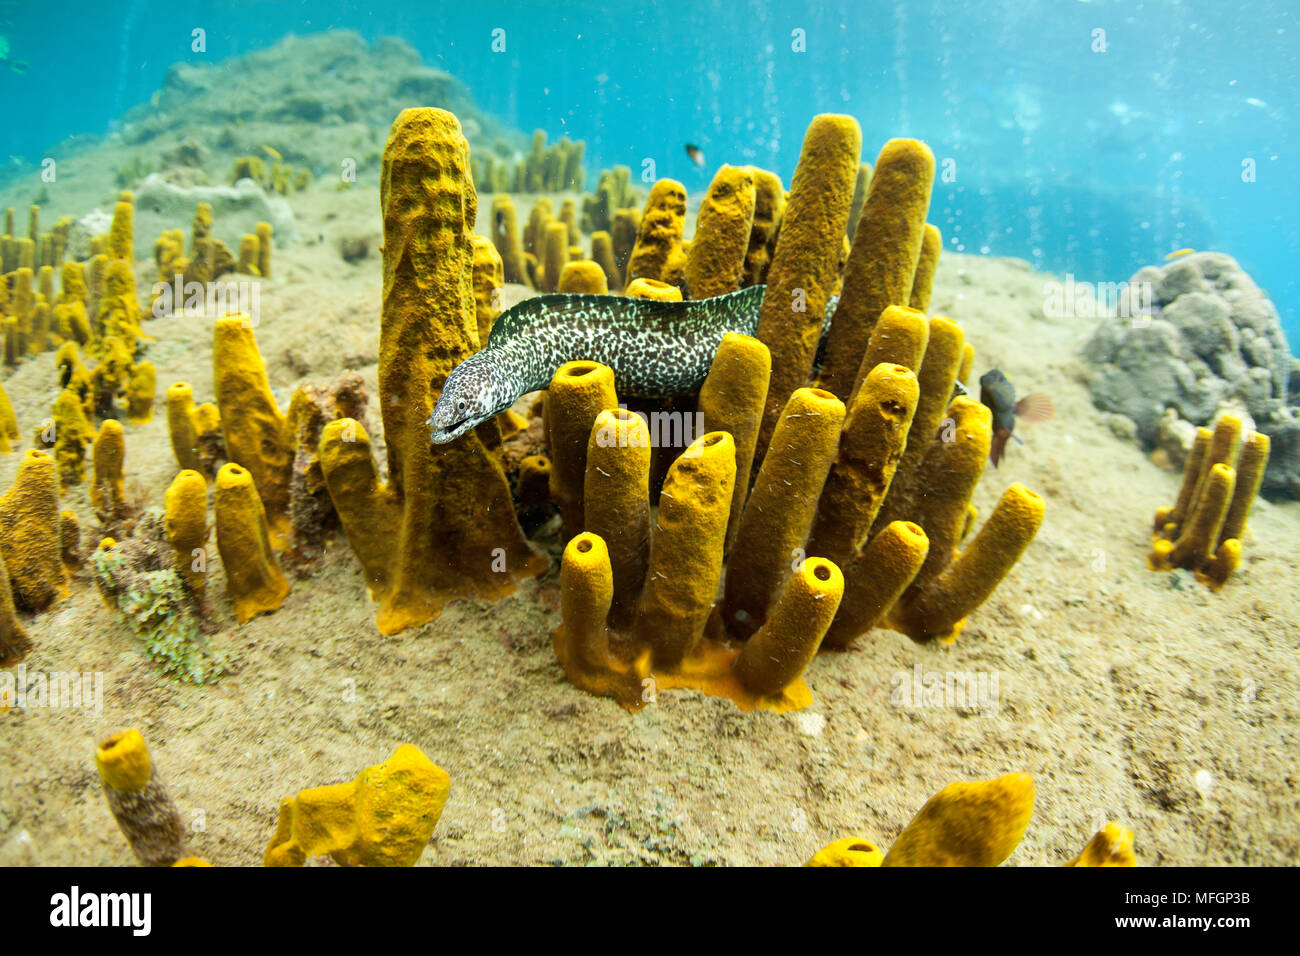 Spotted moray eel, Gymnothorax moringa inside yellow tube sponges, Aplysina fistularis, Dominica, Caribbean Sea, Atlantic Ocean. Stock Photo